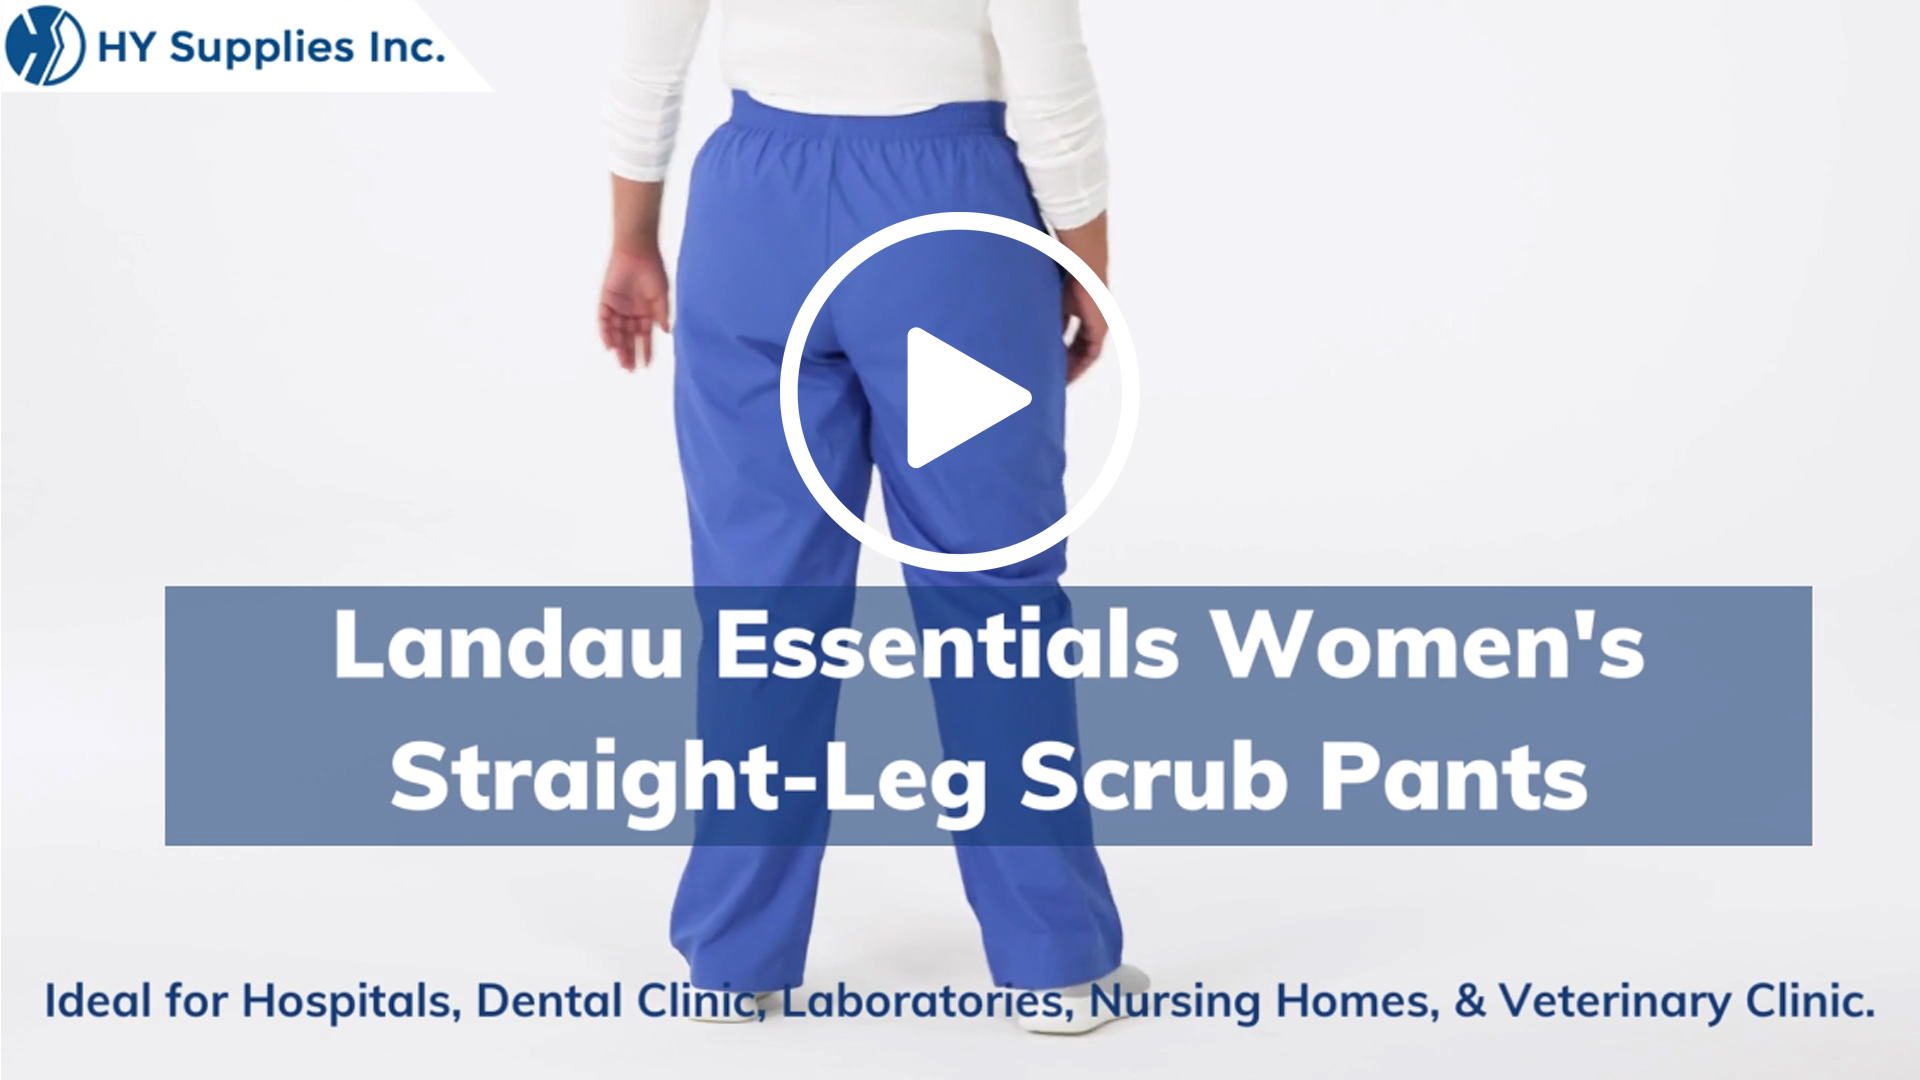 Landau Essentials Women's Straight-Leg Scrub Pants